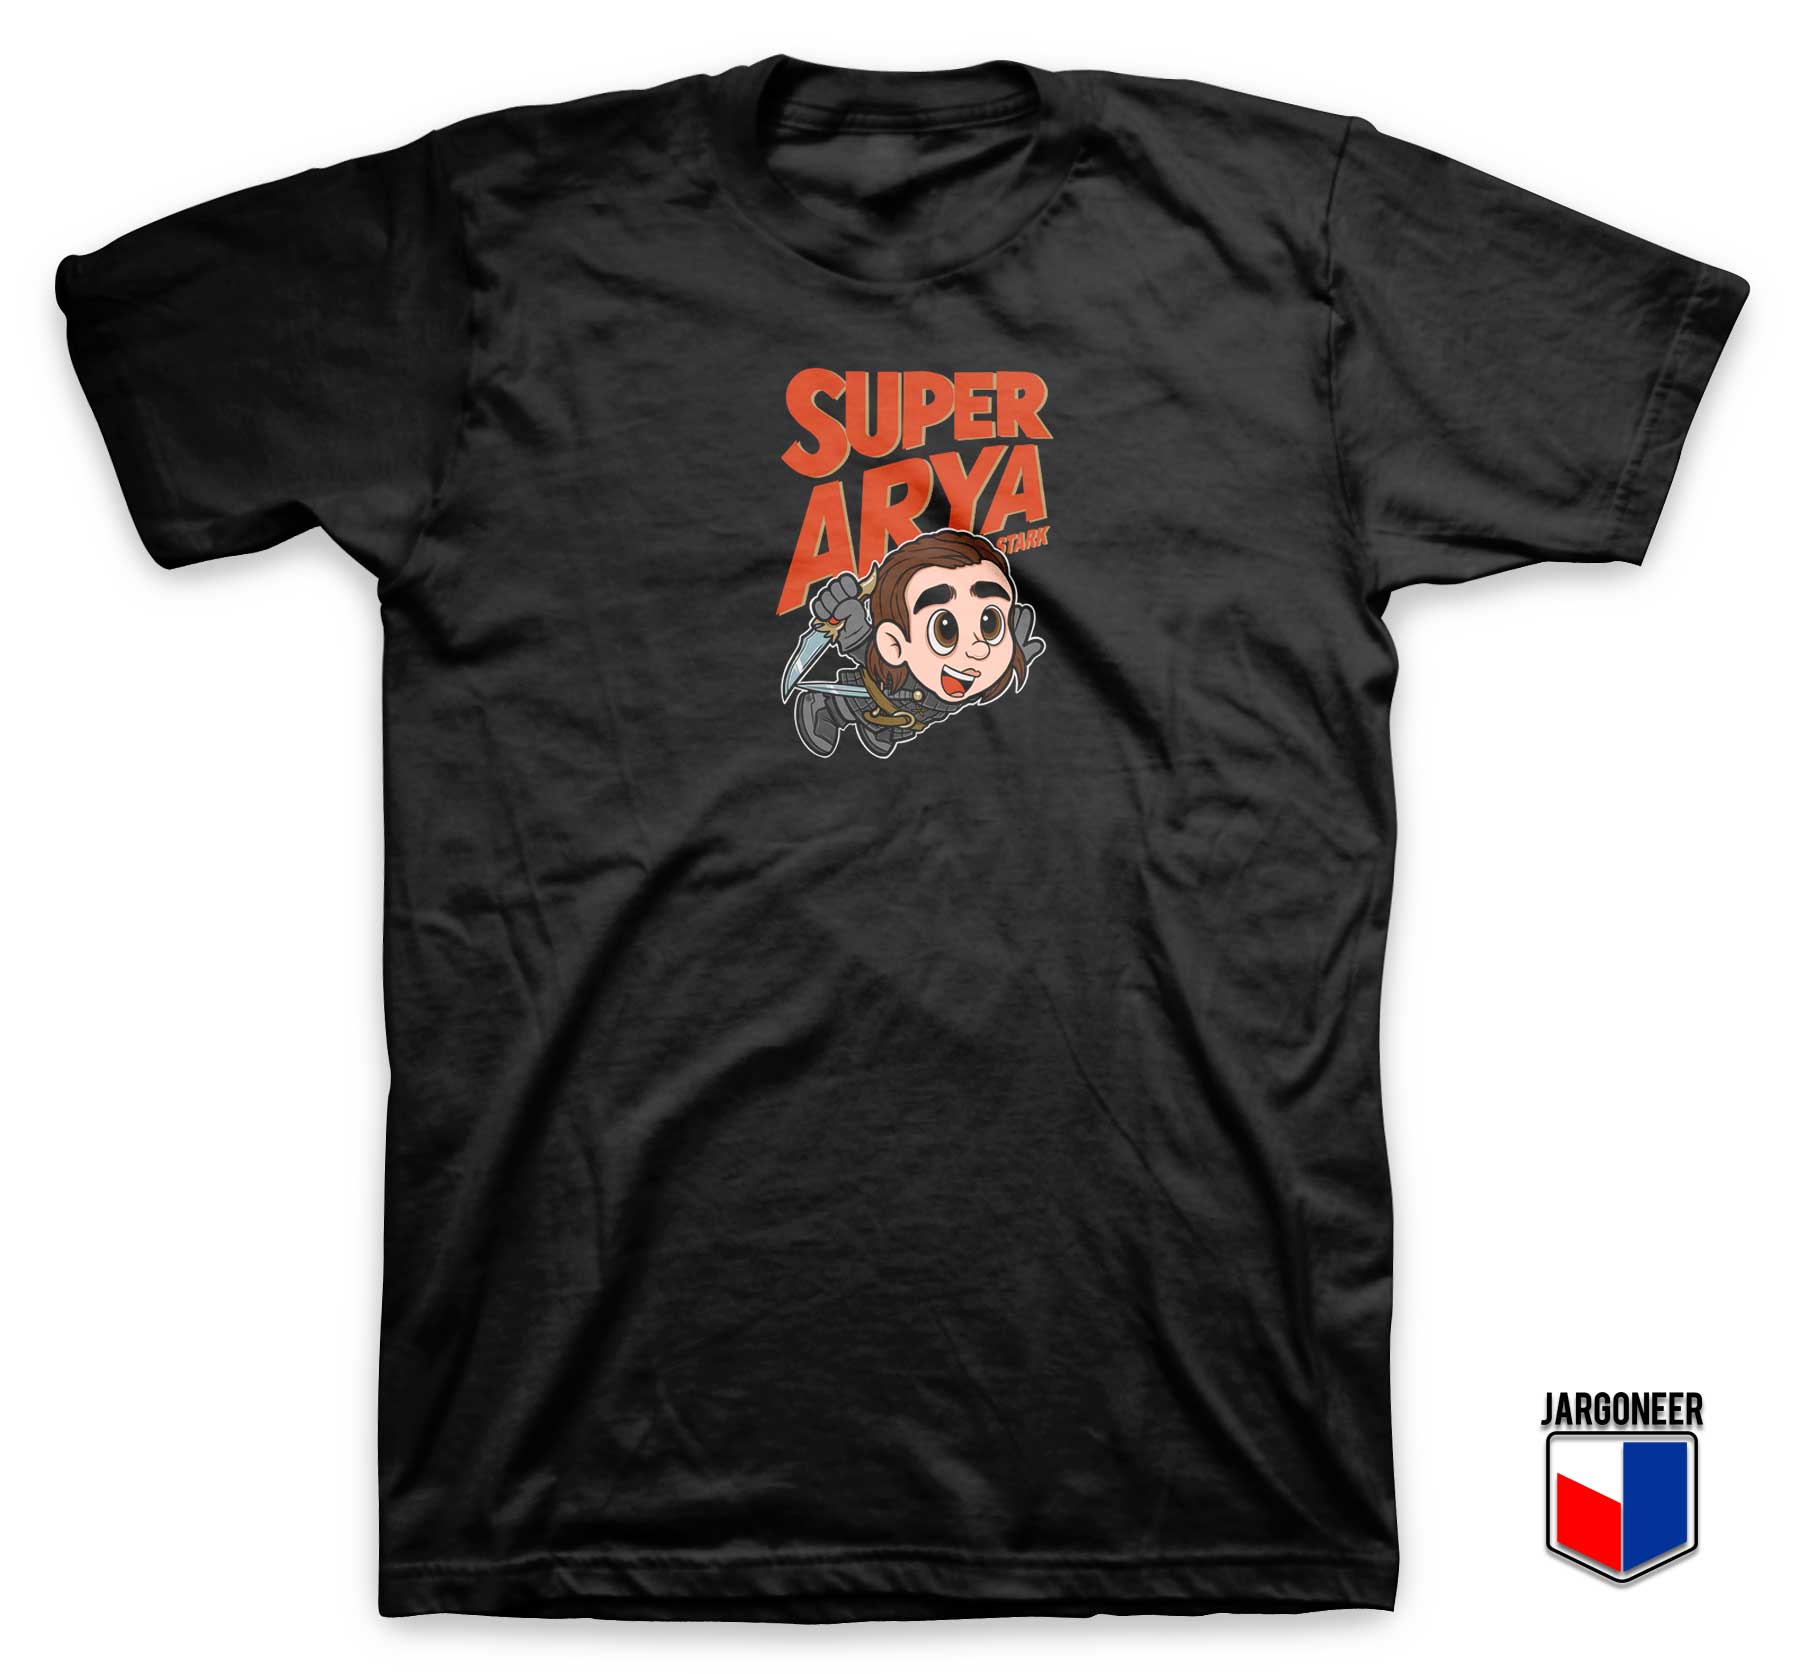 Super Arya Stark T Shirt - Shop Unique Graphic Cool Shirt Designs